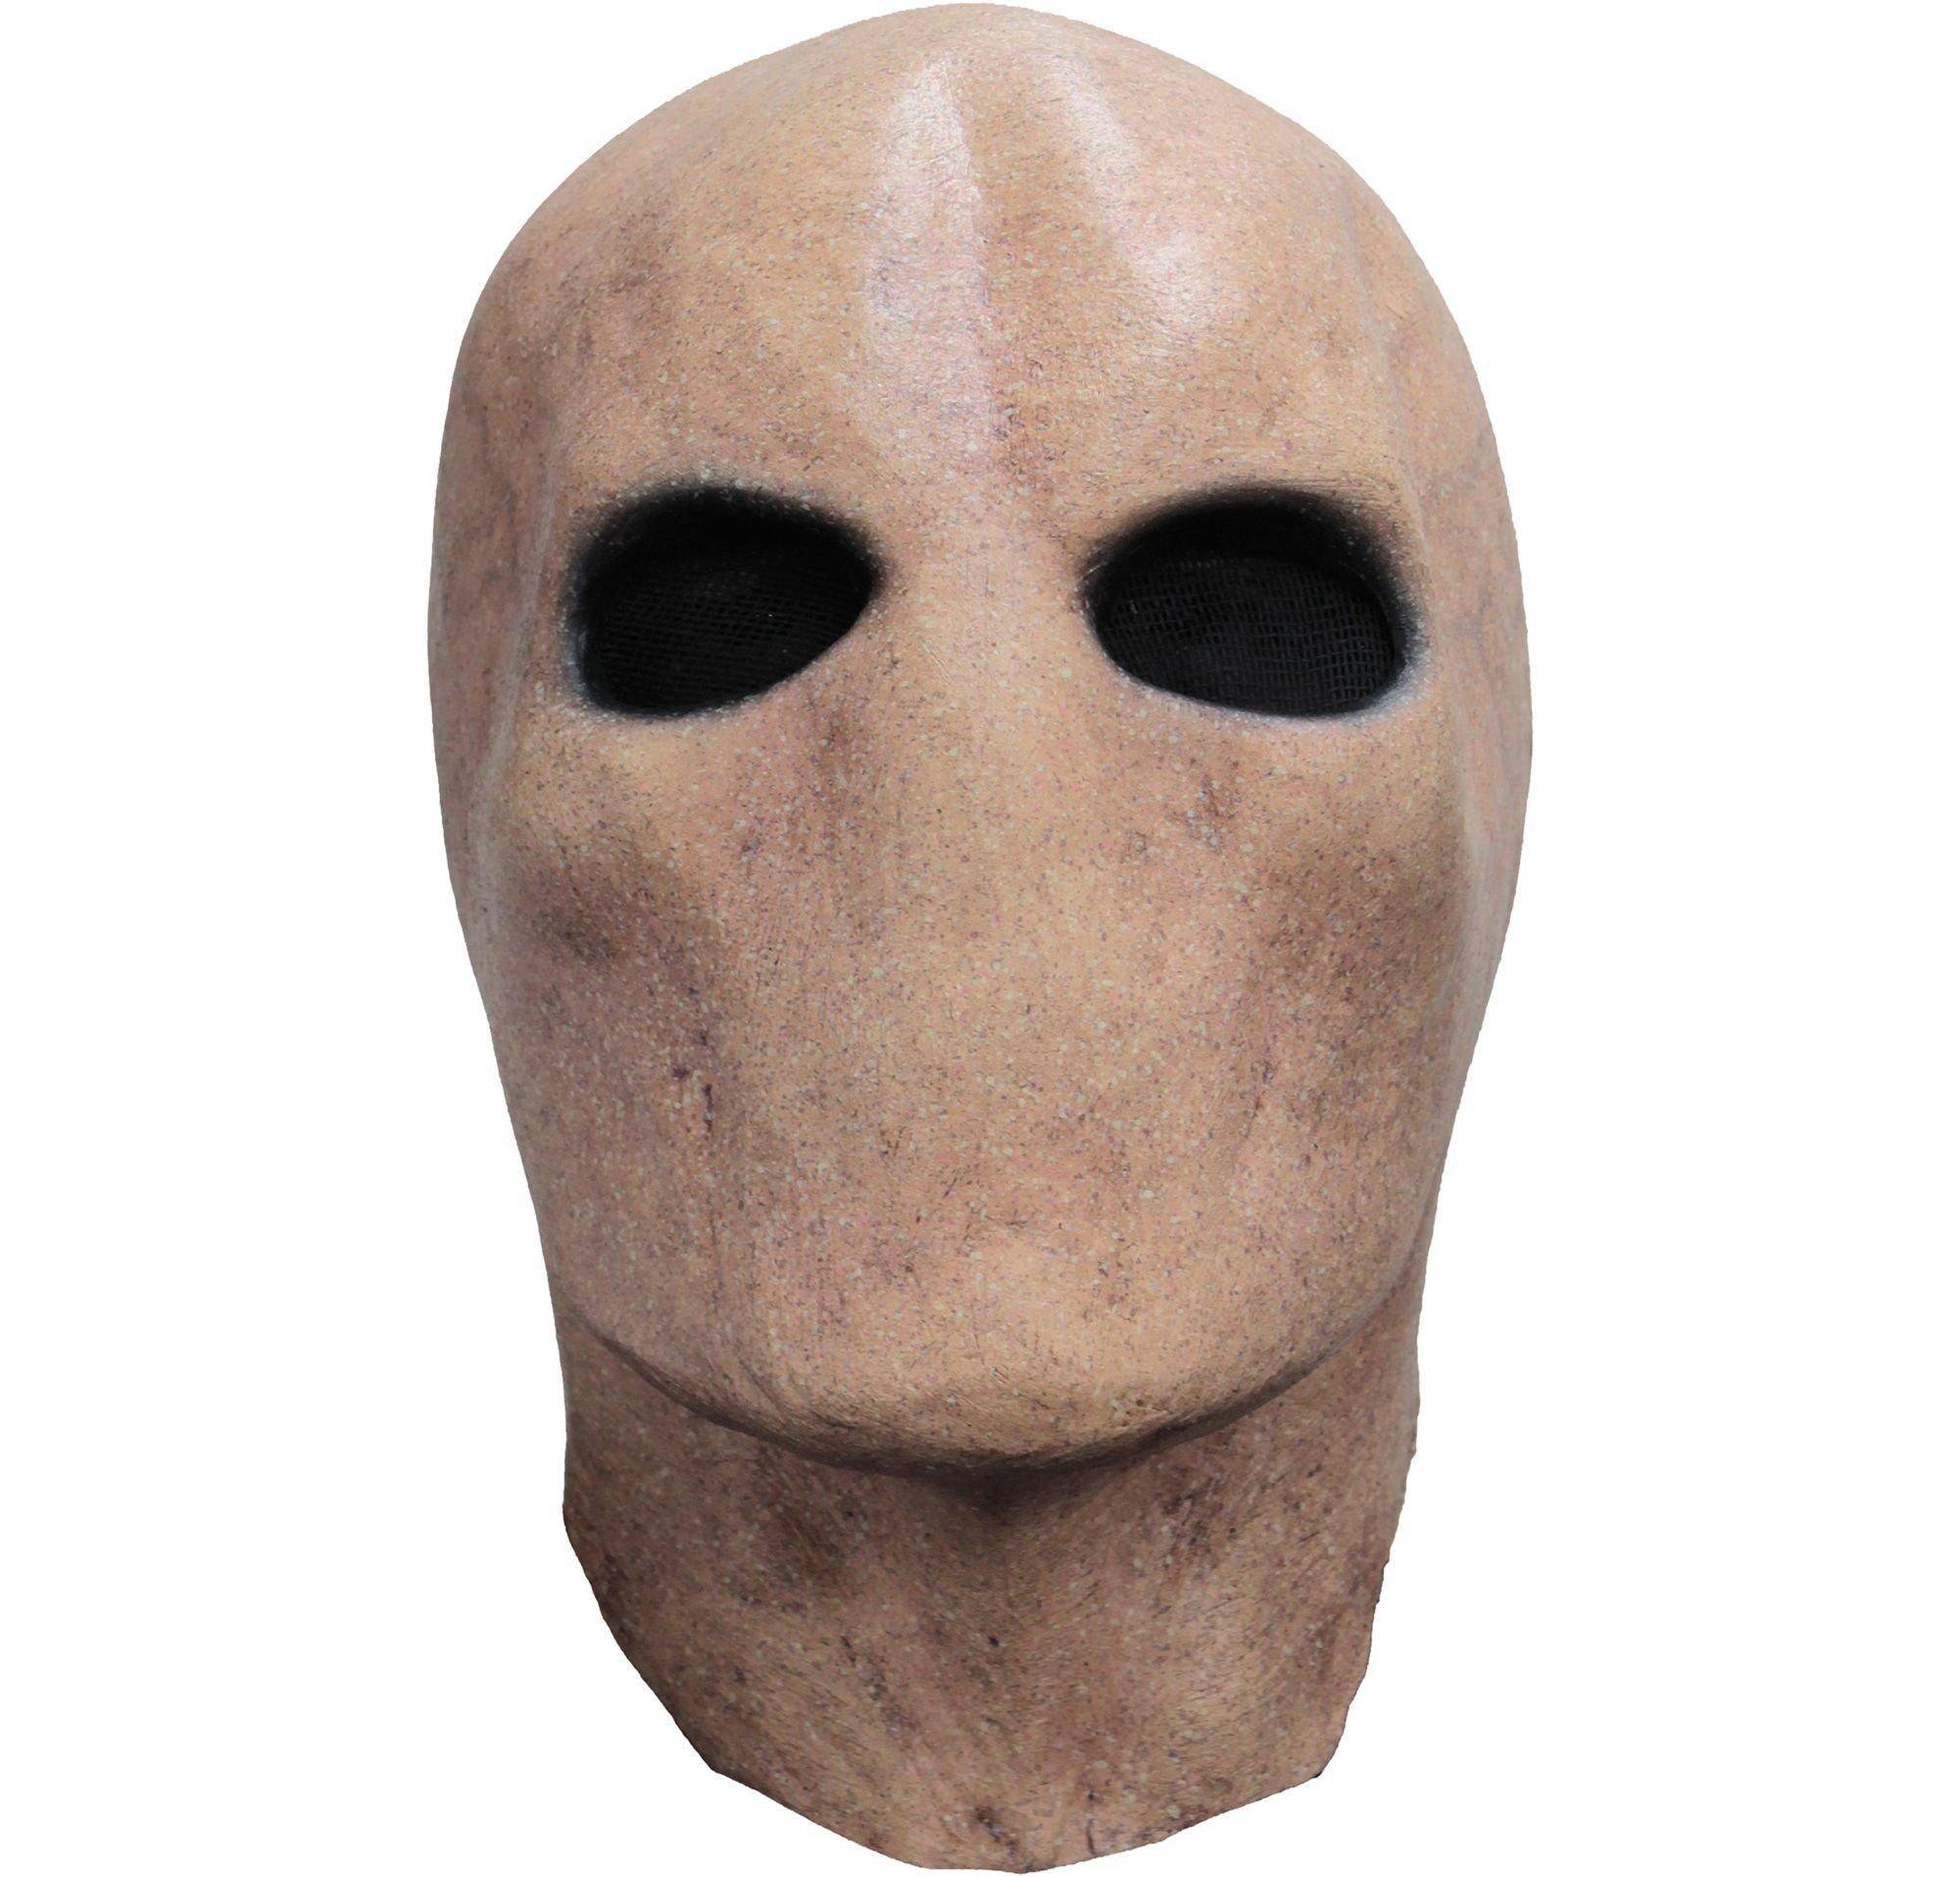 slender man costume mask